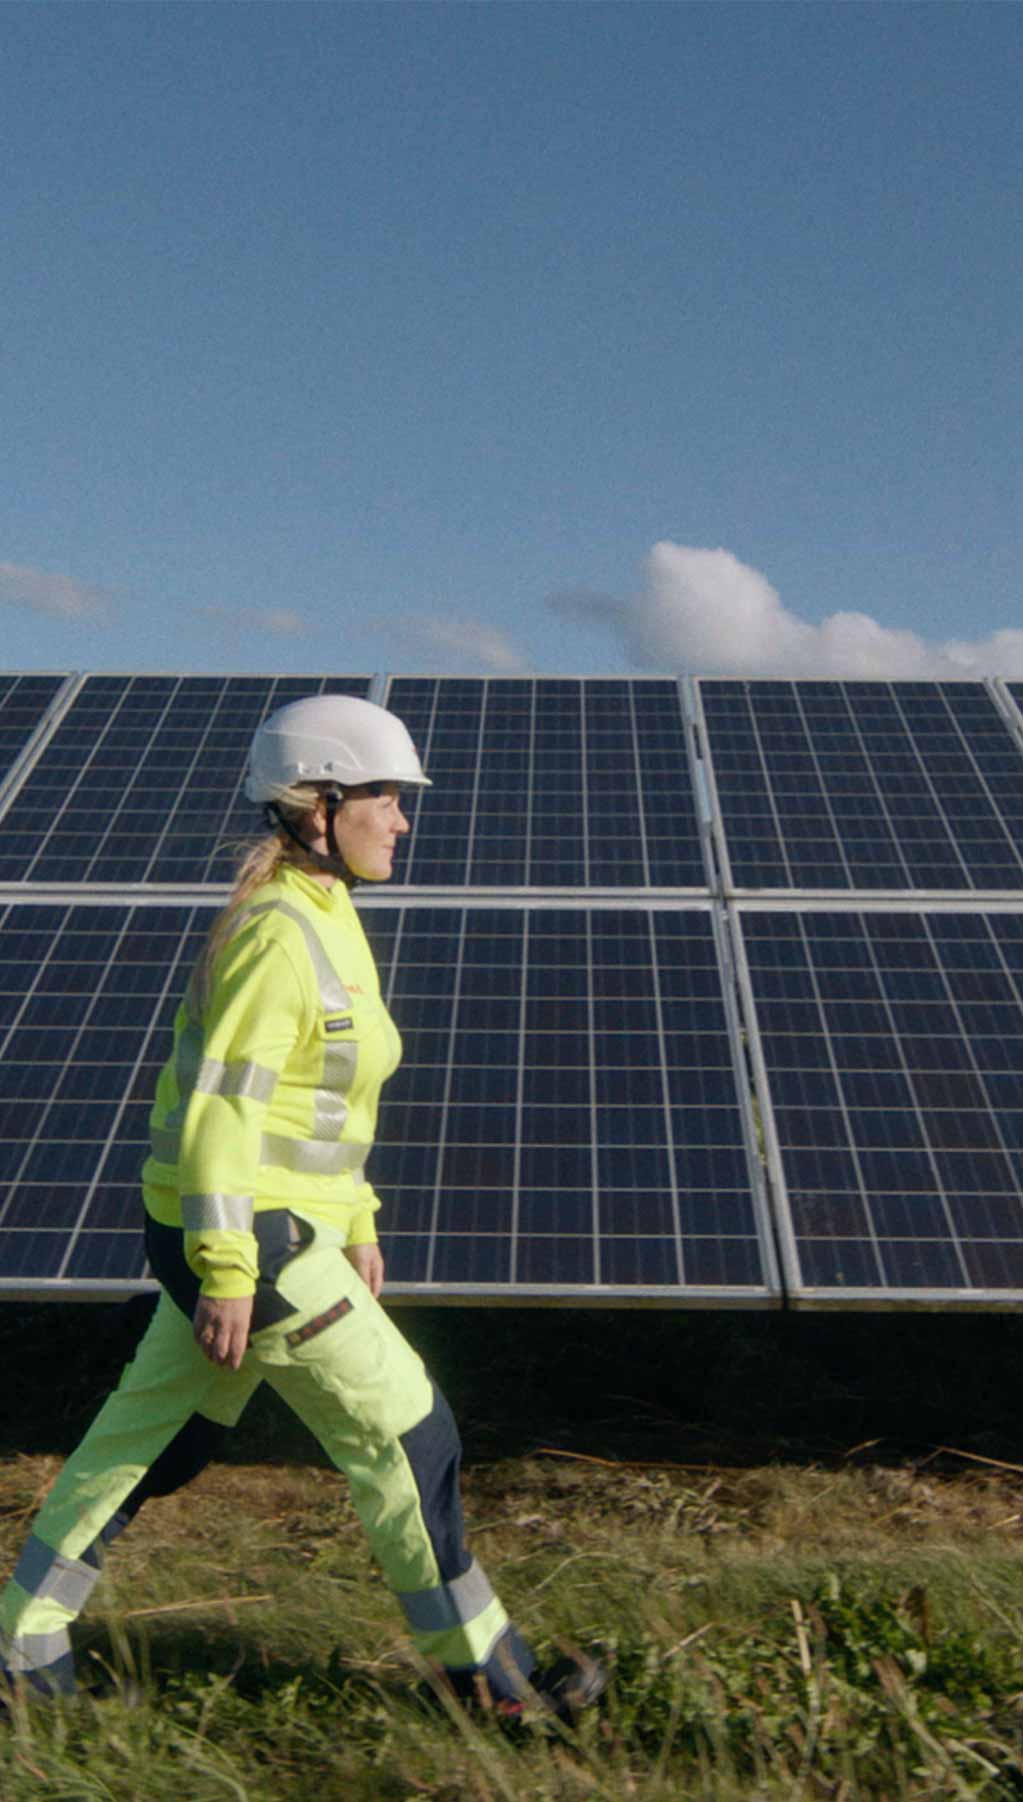 Woman walking past a solar panel farm